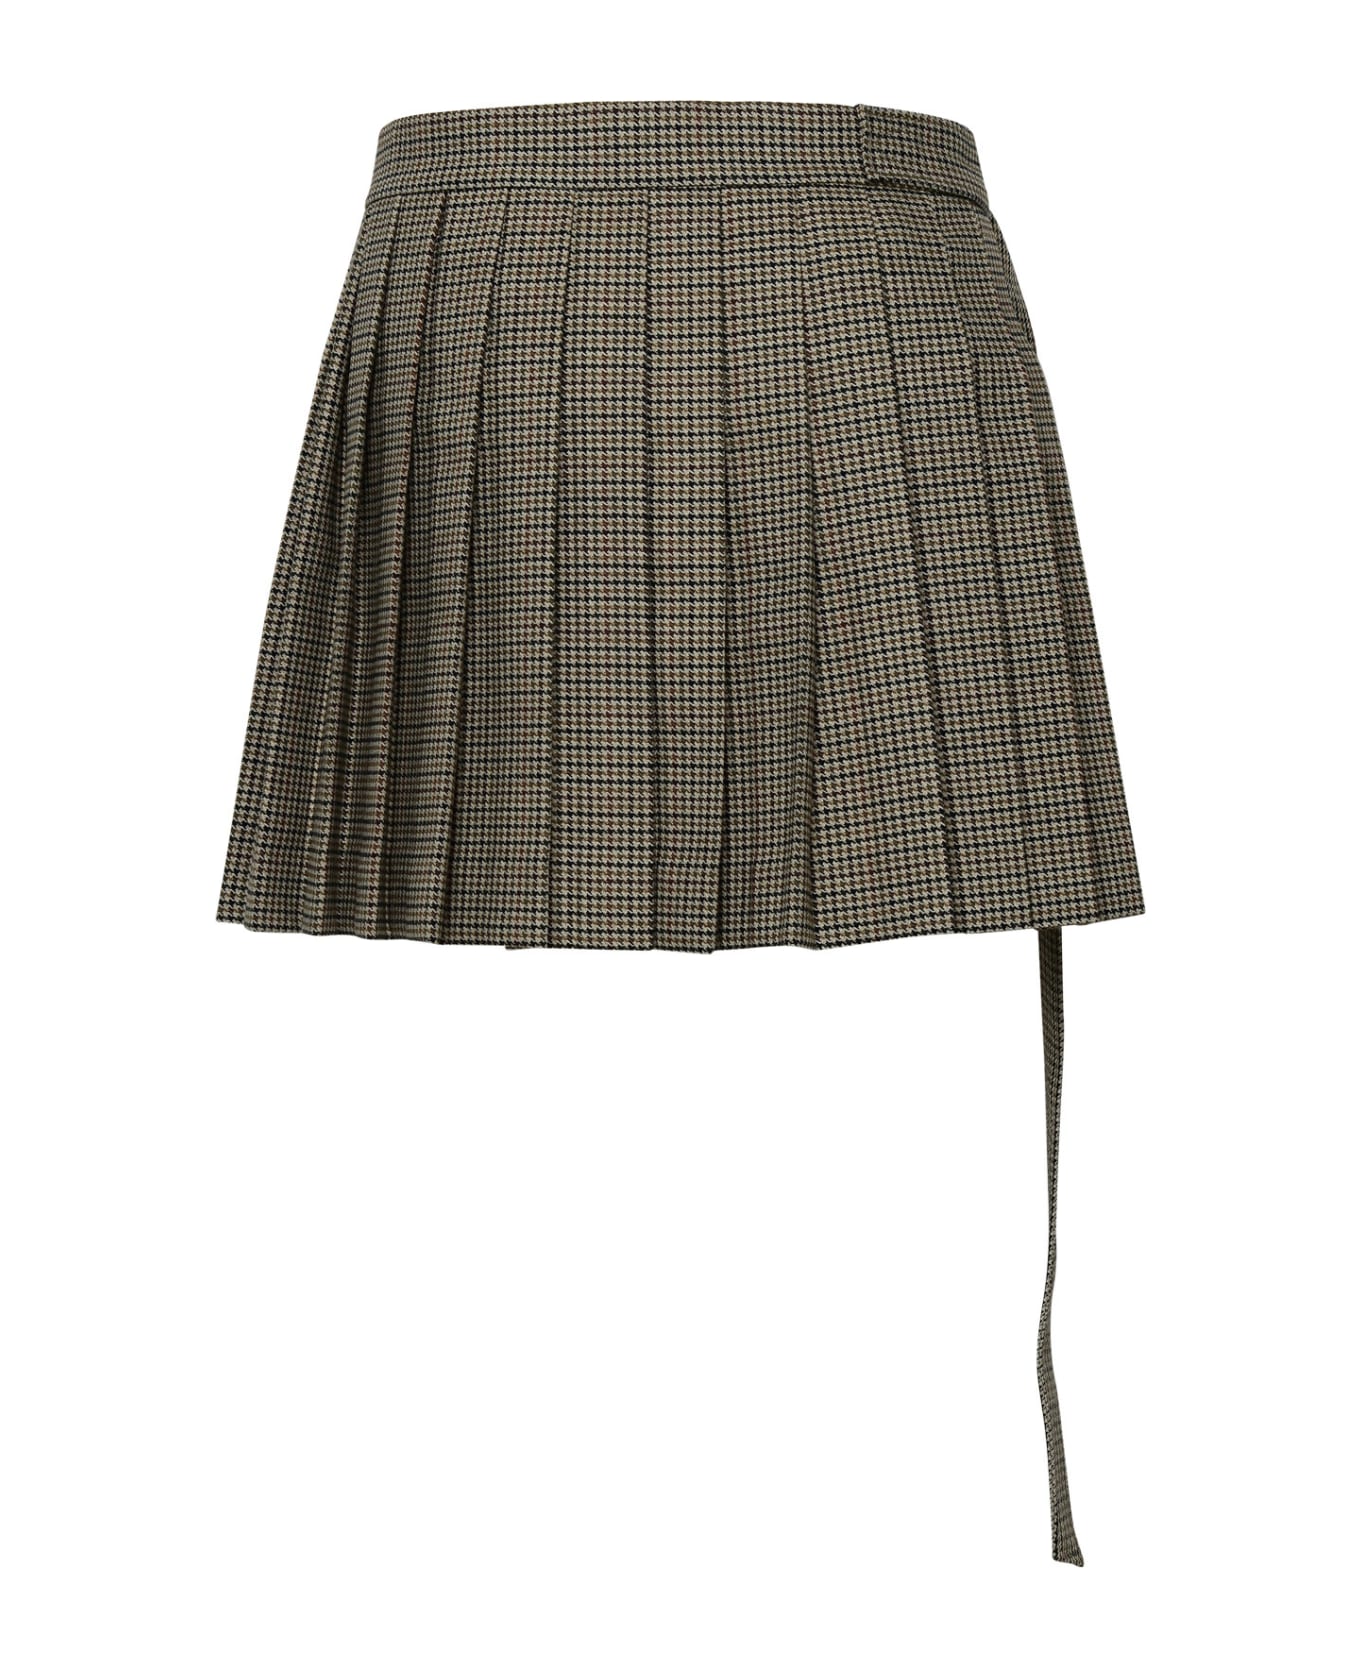 Ami Alexandre Mattiussi 'kilt' Beige Wool Miniskirt - Beige スカート